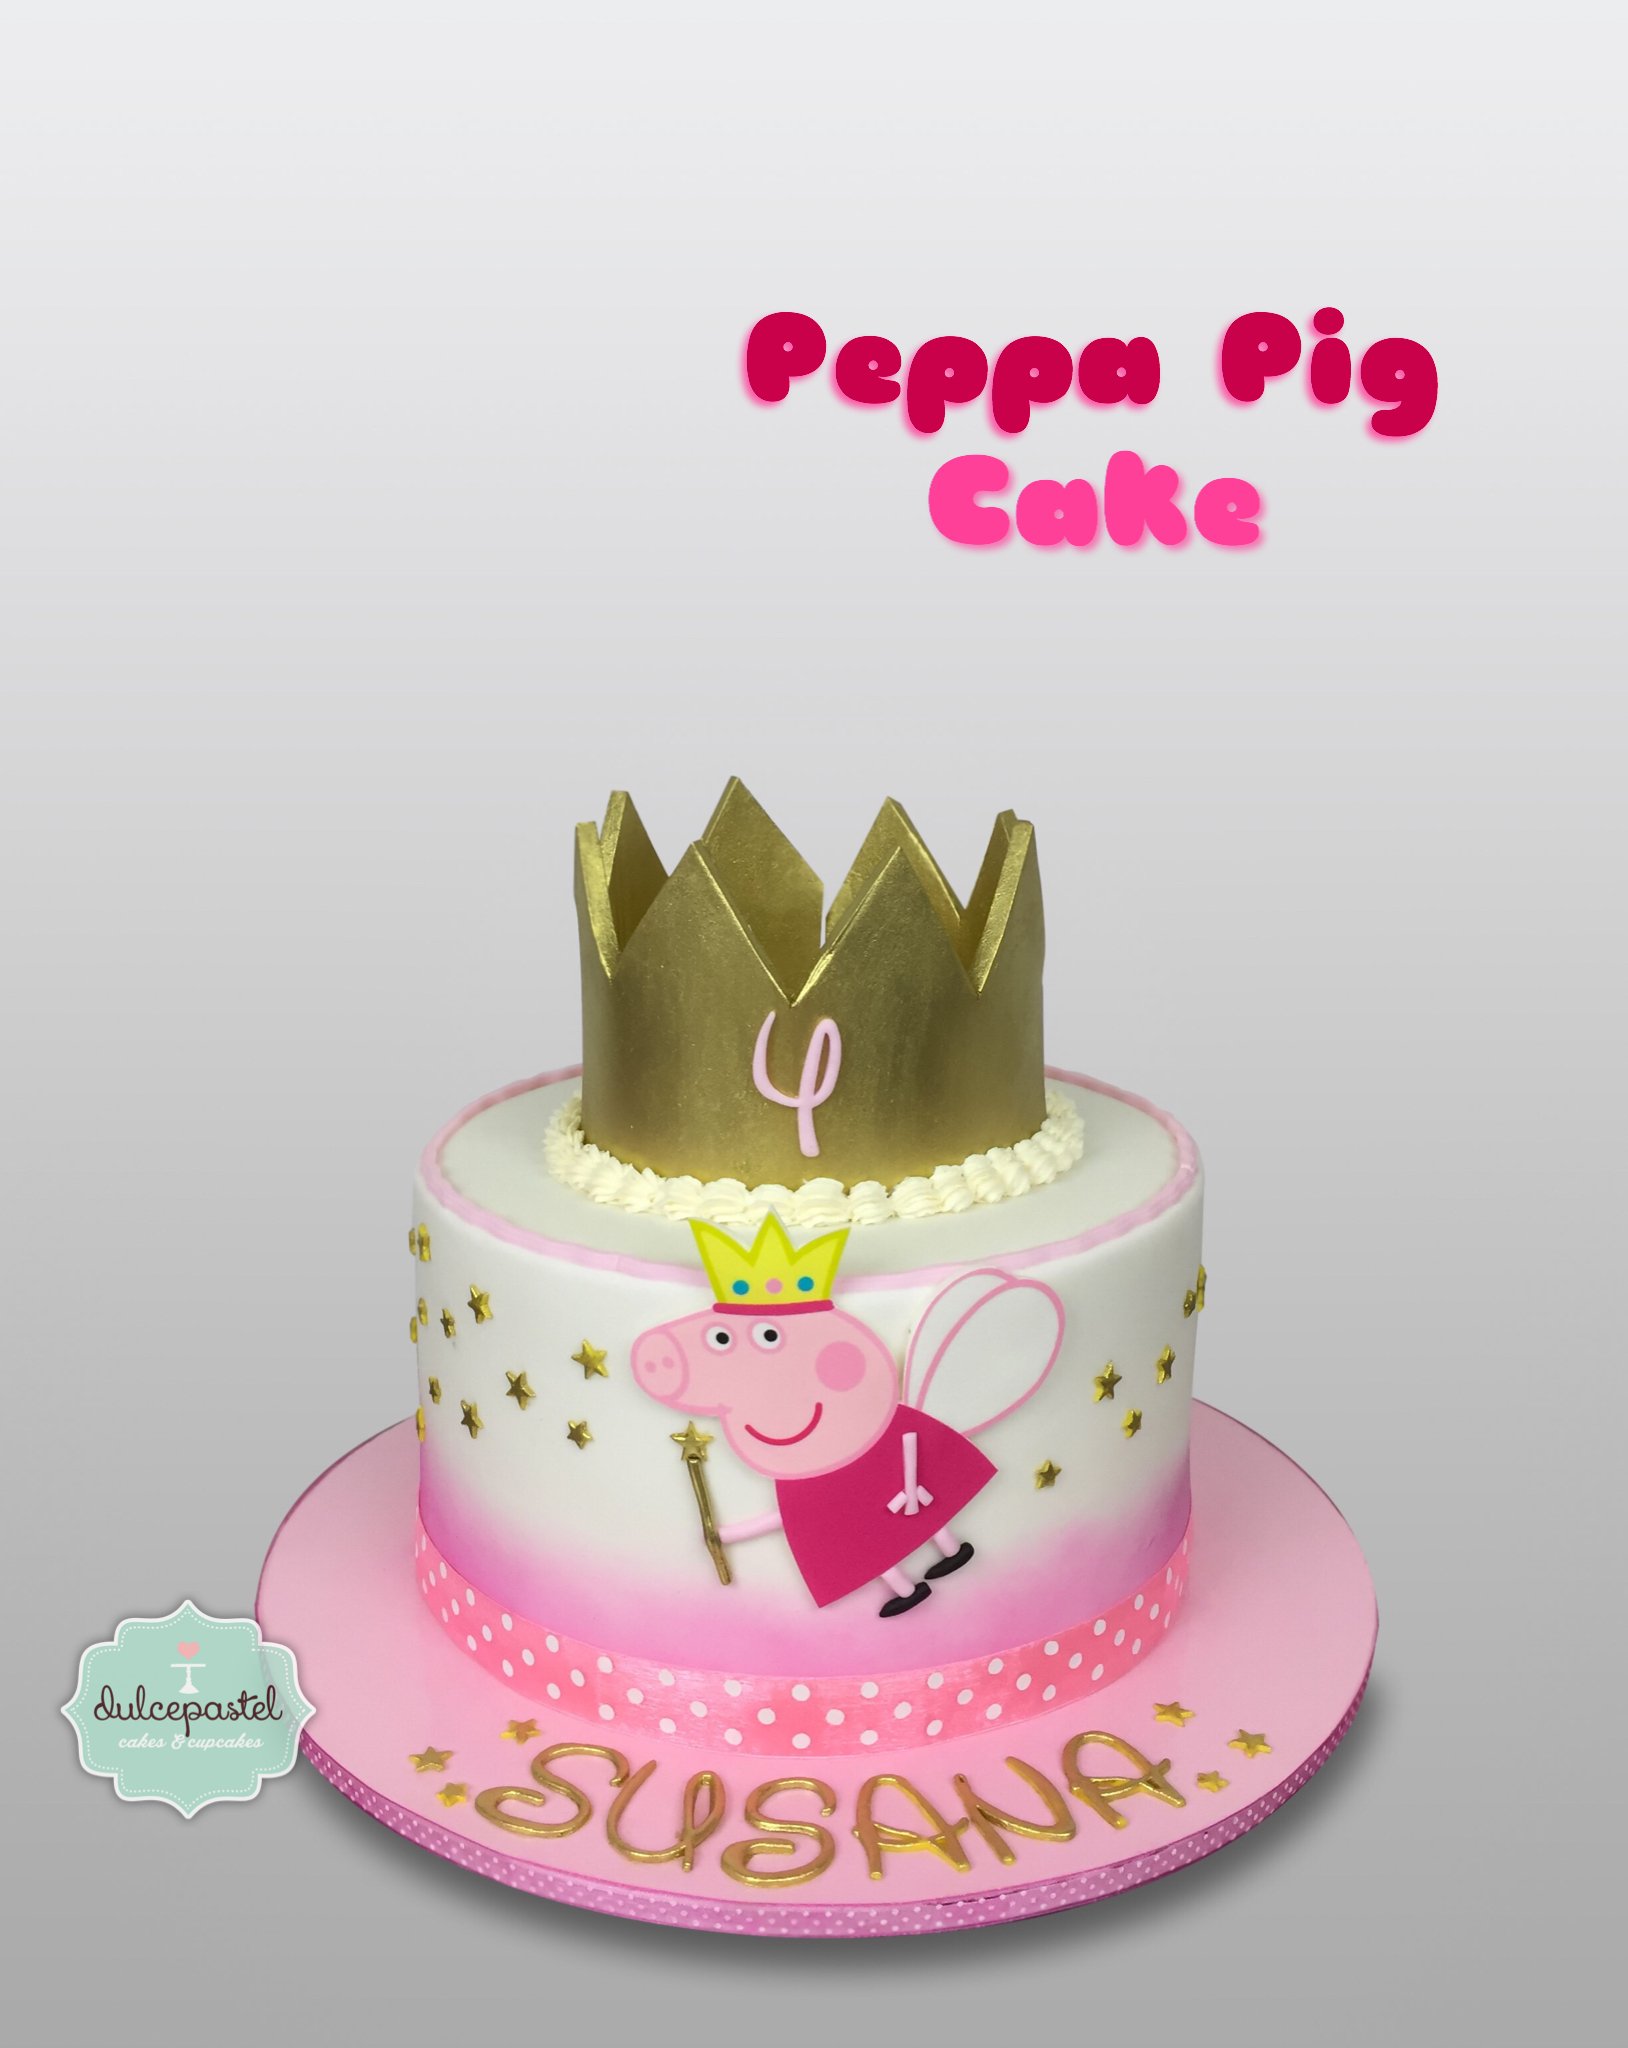 Ver a través de motivo Saltar DulcePastel on Twitter: "Peppa Pig Cake - Tutorial Corona Peppa por  https://t.co/OvbAzpYf45 🎈🐷🐽🎈 #tortapeppapig 🐷🎂 #peppapig 🐽🐷  #peppapigcake #tortasmedellin #tortaspersonalizadas #tortastematicas  #cupcakes #cupcakesmedellin #tortasdecoradas ...